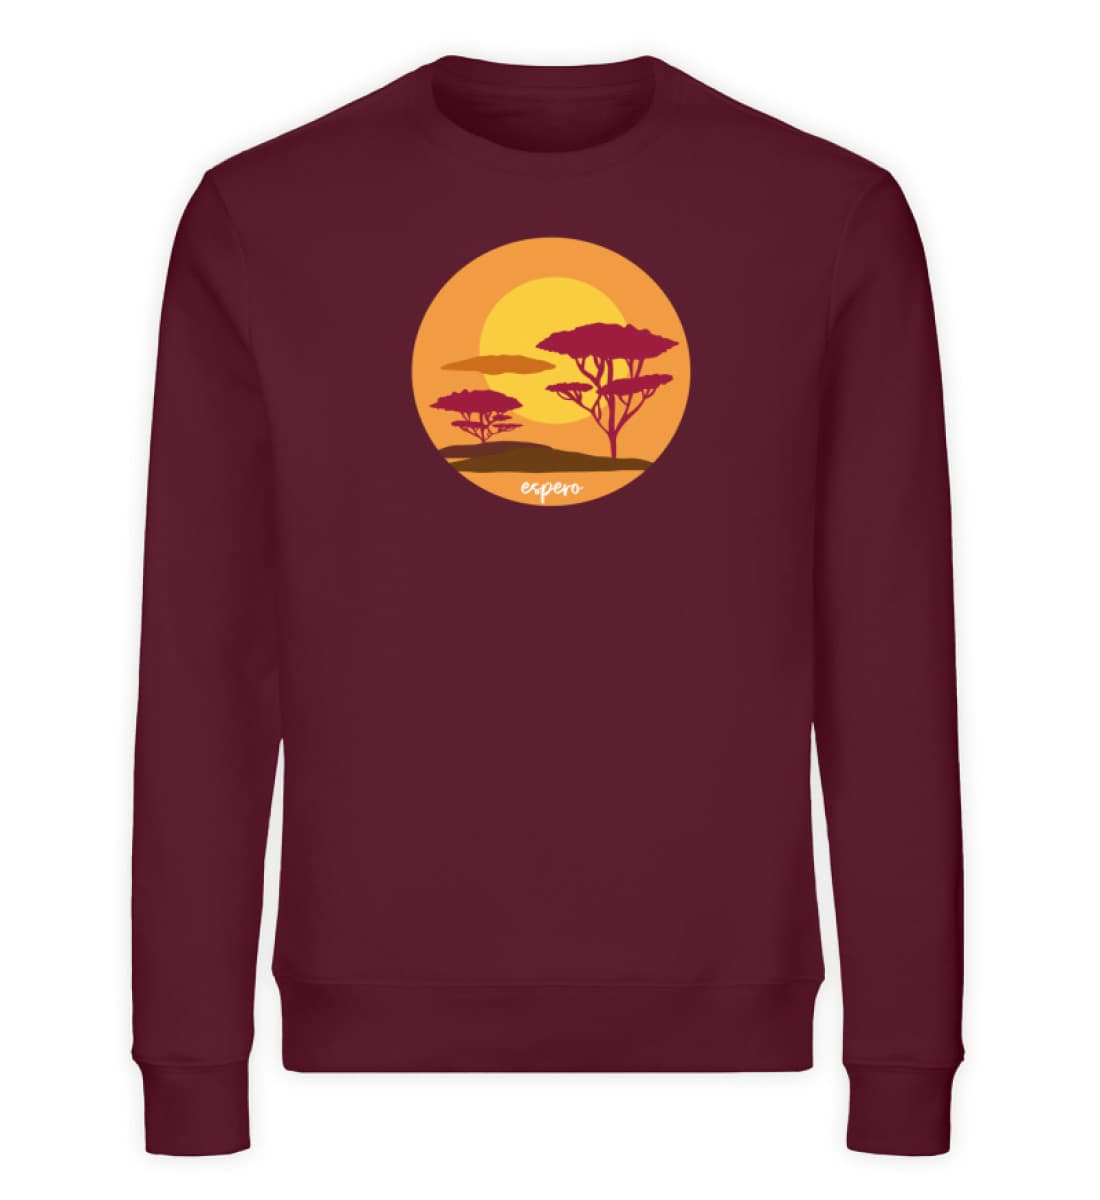 Sweater espero Free Bordeaux - Unisex Organic Sweatshirt-839